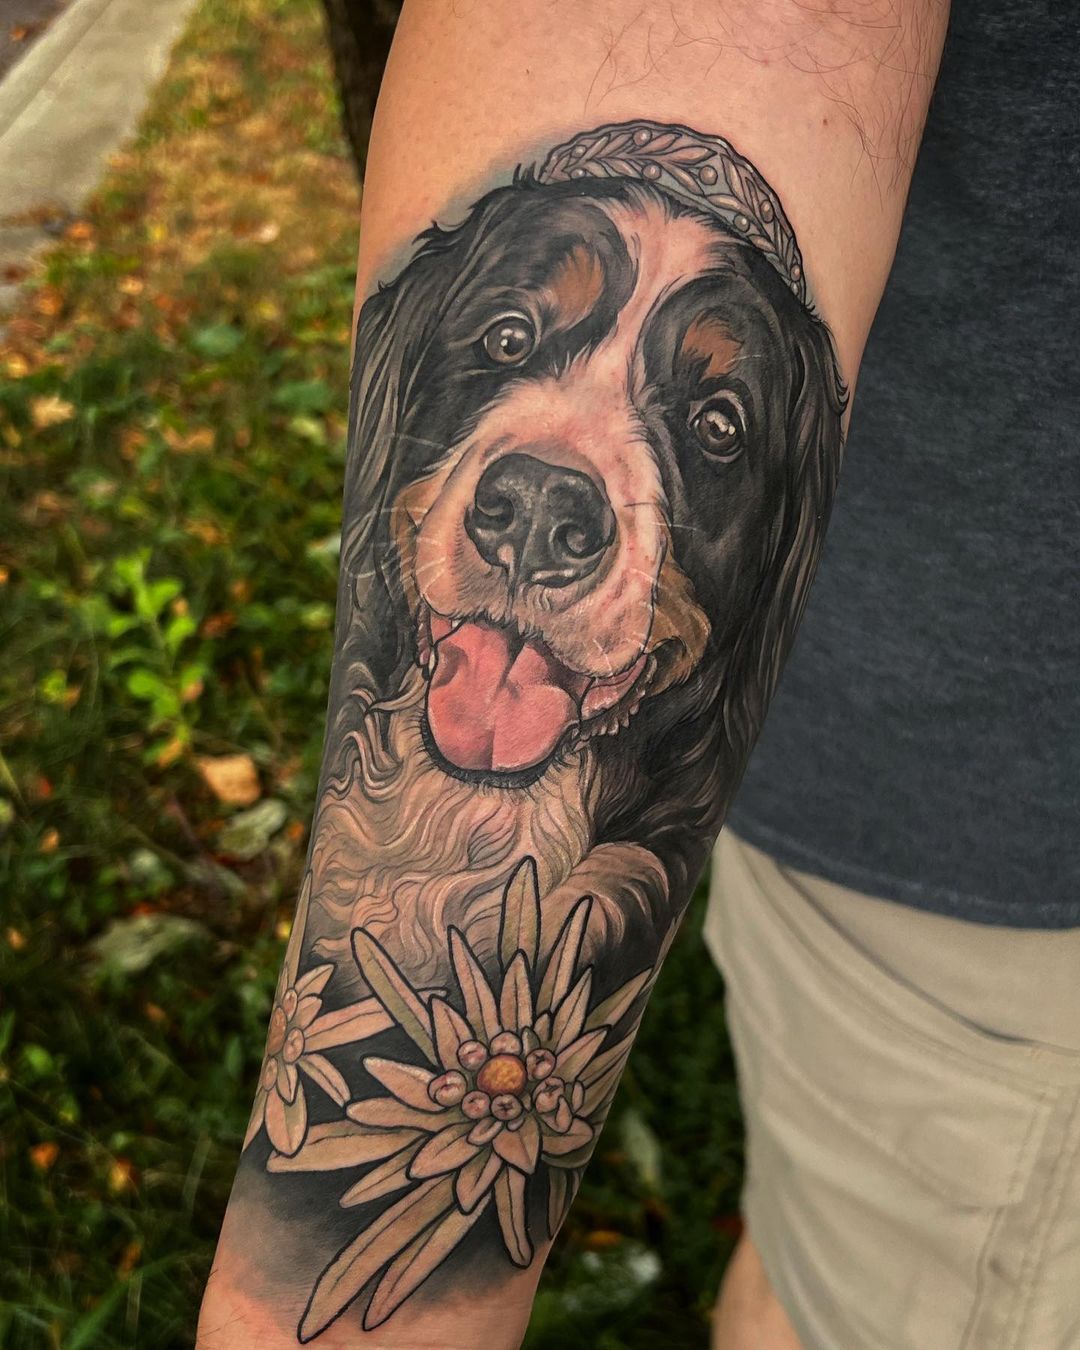 Arm tattoo of a dog